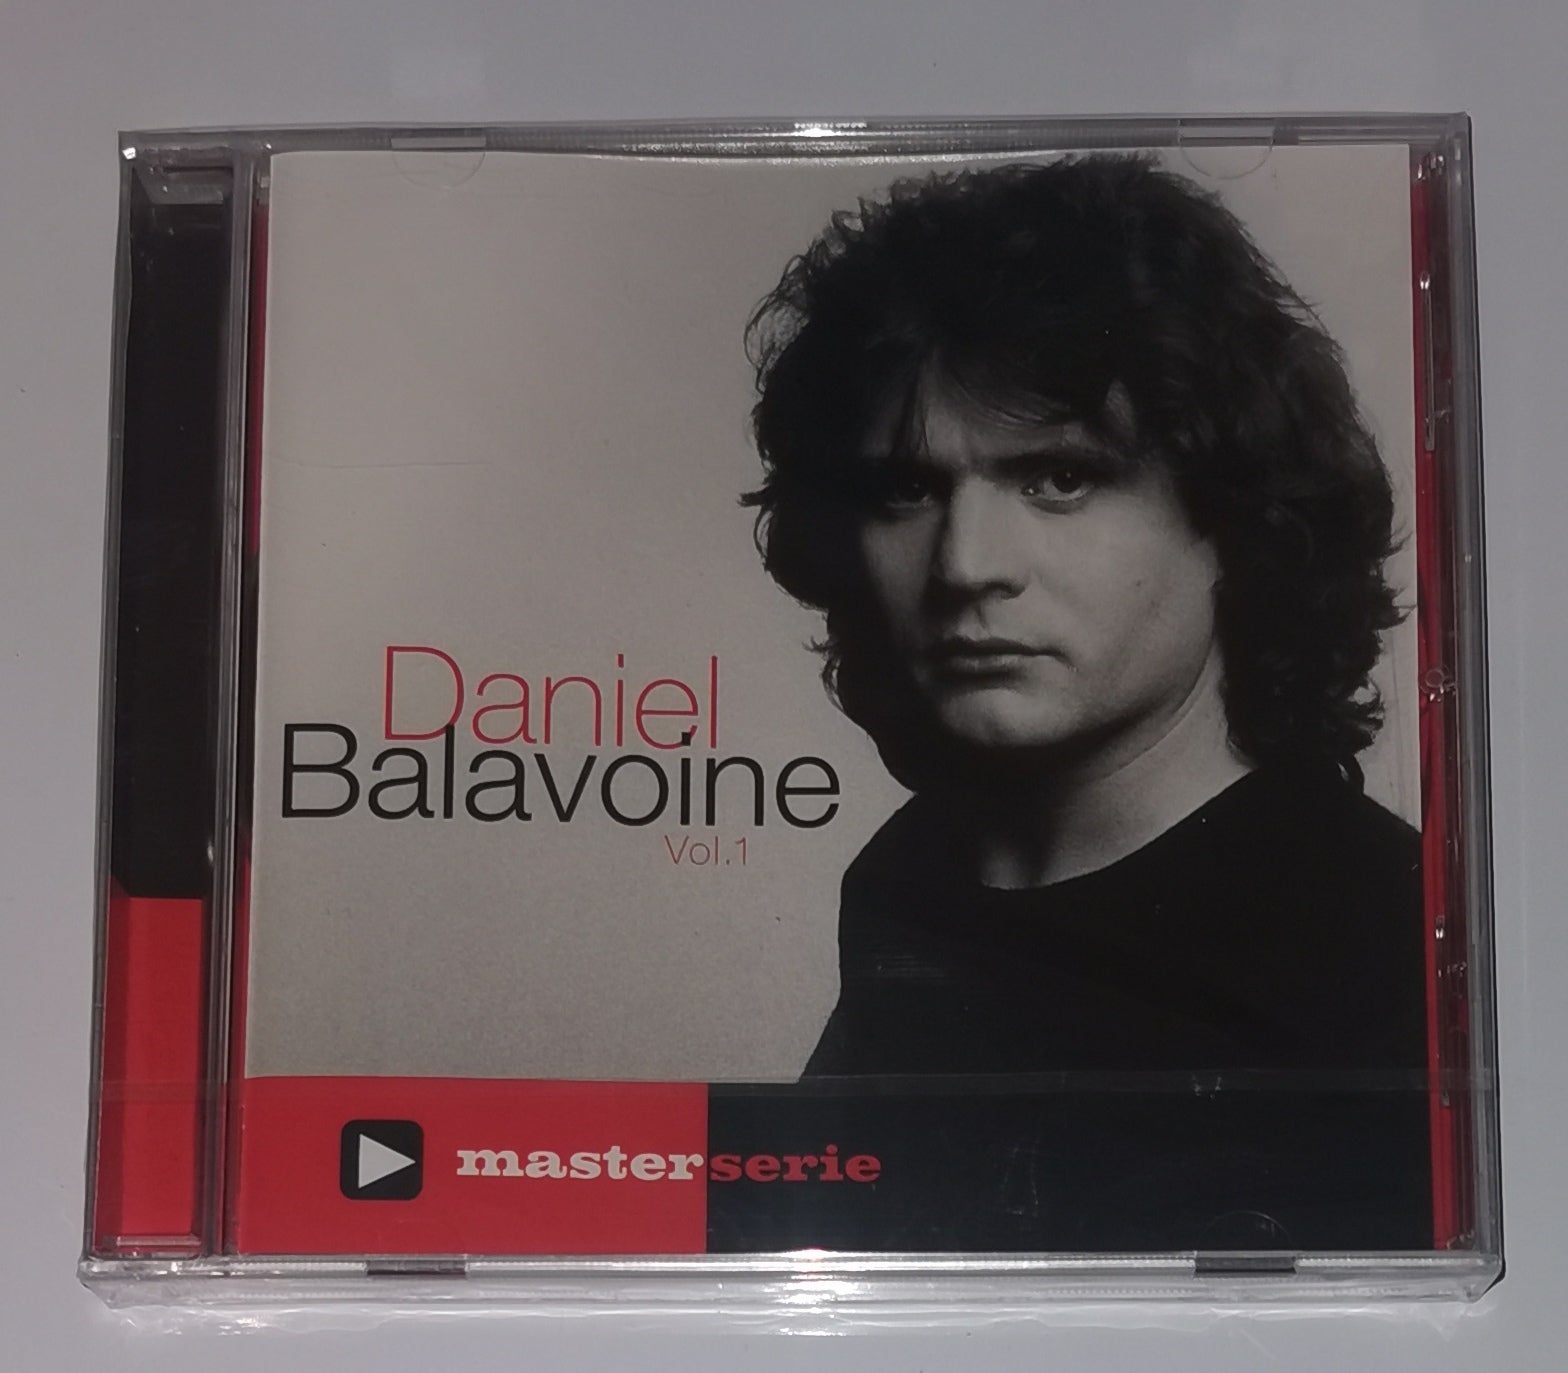 Daniel Balavoine Master Serie Vol1 2009 (CD) [Neu]